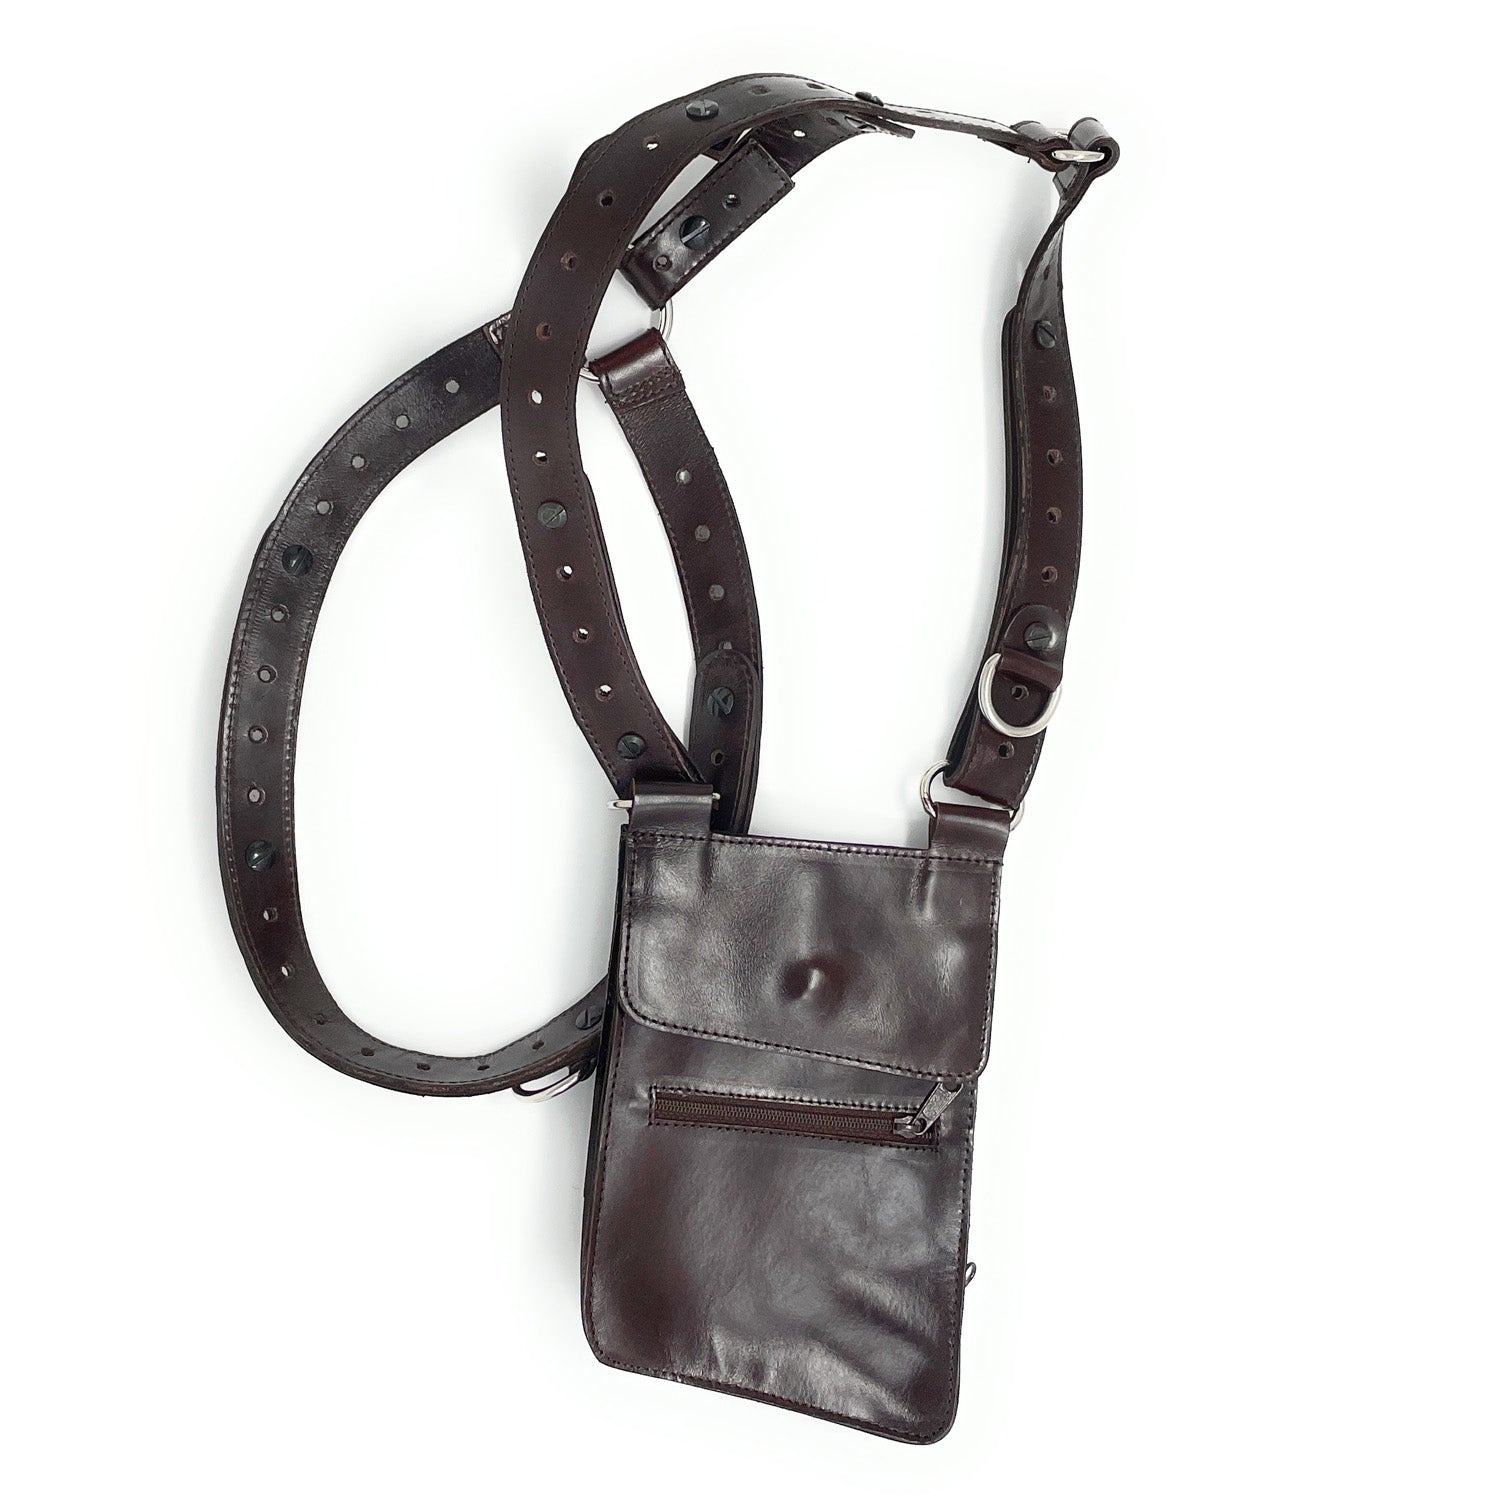 (NEW) Genderfree Modular + Adjustable Utility Holster Harness with Bag v2 (Single or Dual) - NiK Kacy